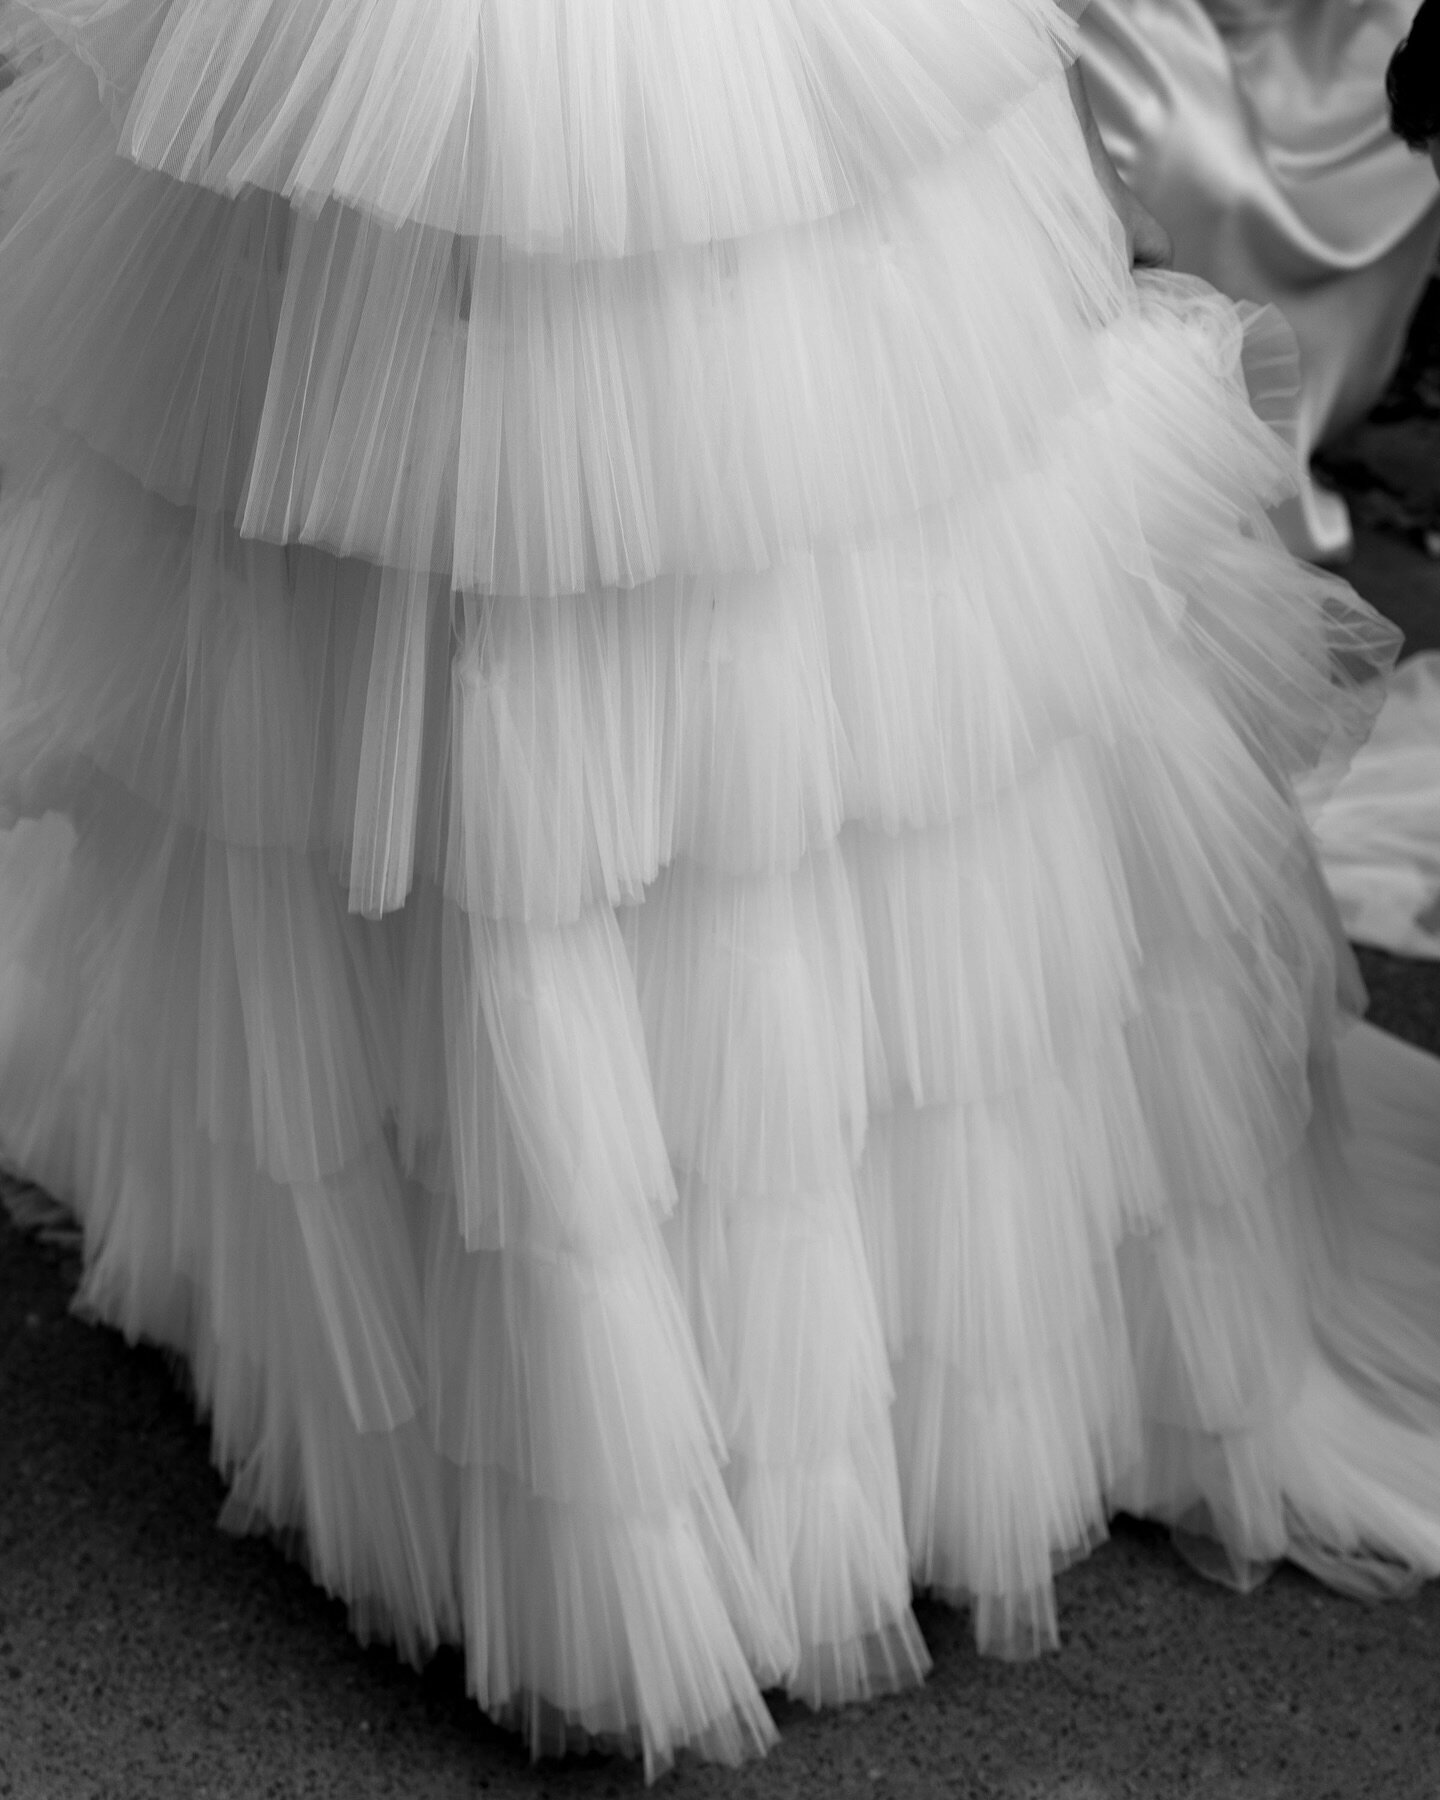 We&rsquo;re obsessed with the texture in this beautiful @kyhastudios dress 🖤 &mdash; 
.
.
.
.
.
.
#brisbanebride #brisbanewedding #australianbride #goldcoastwedding #goldcoastbride
#brisbaneweddingvideographer #brisbaneweddingphotographer #goldcoast